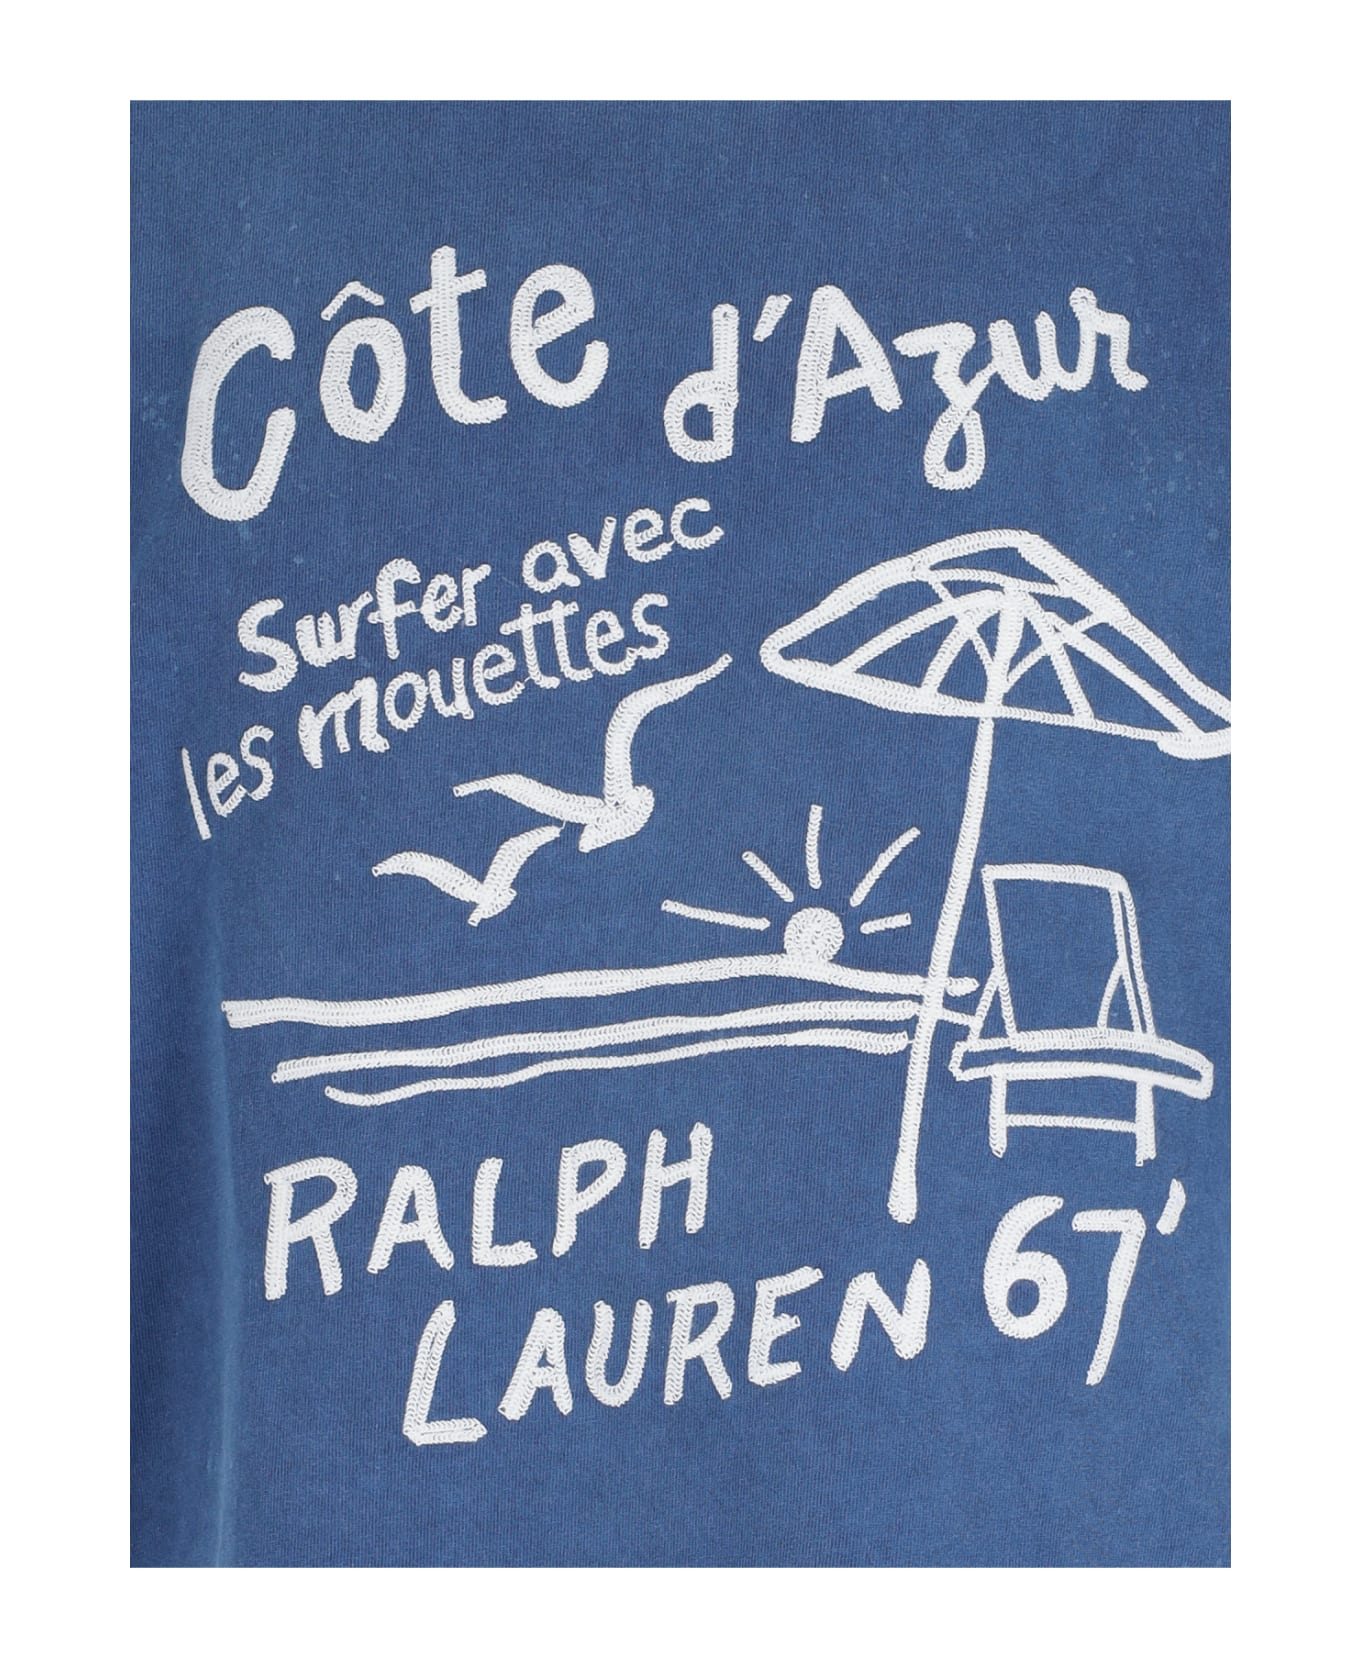 Polo Ralph Lauren Printed T-shirt - Blue